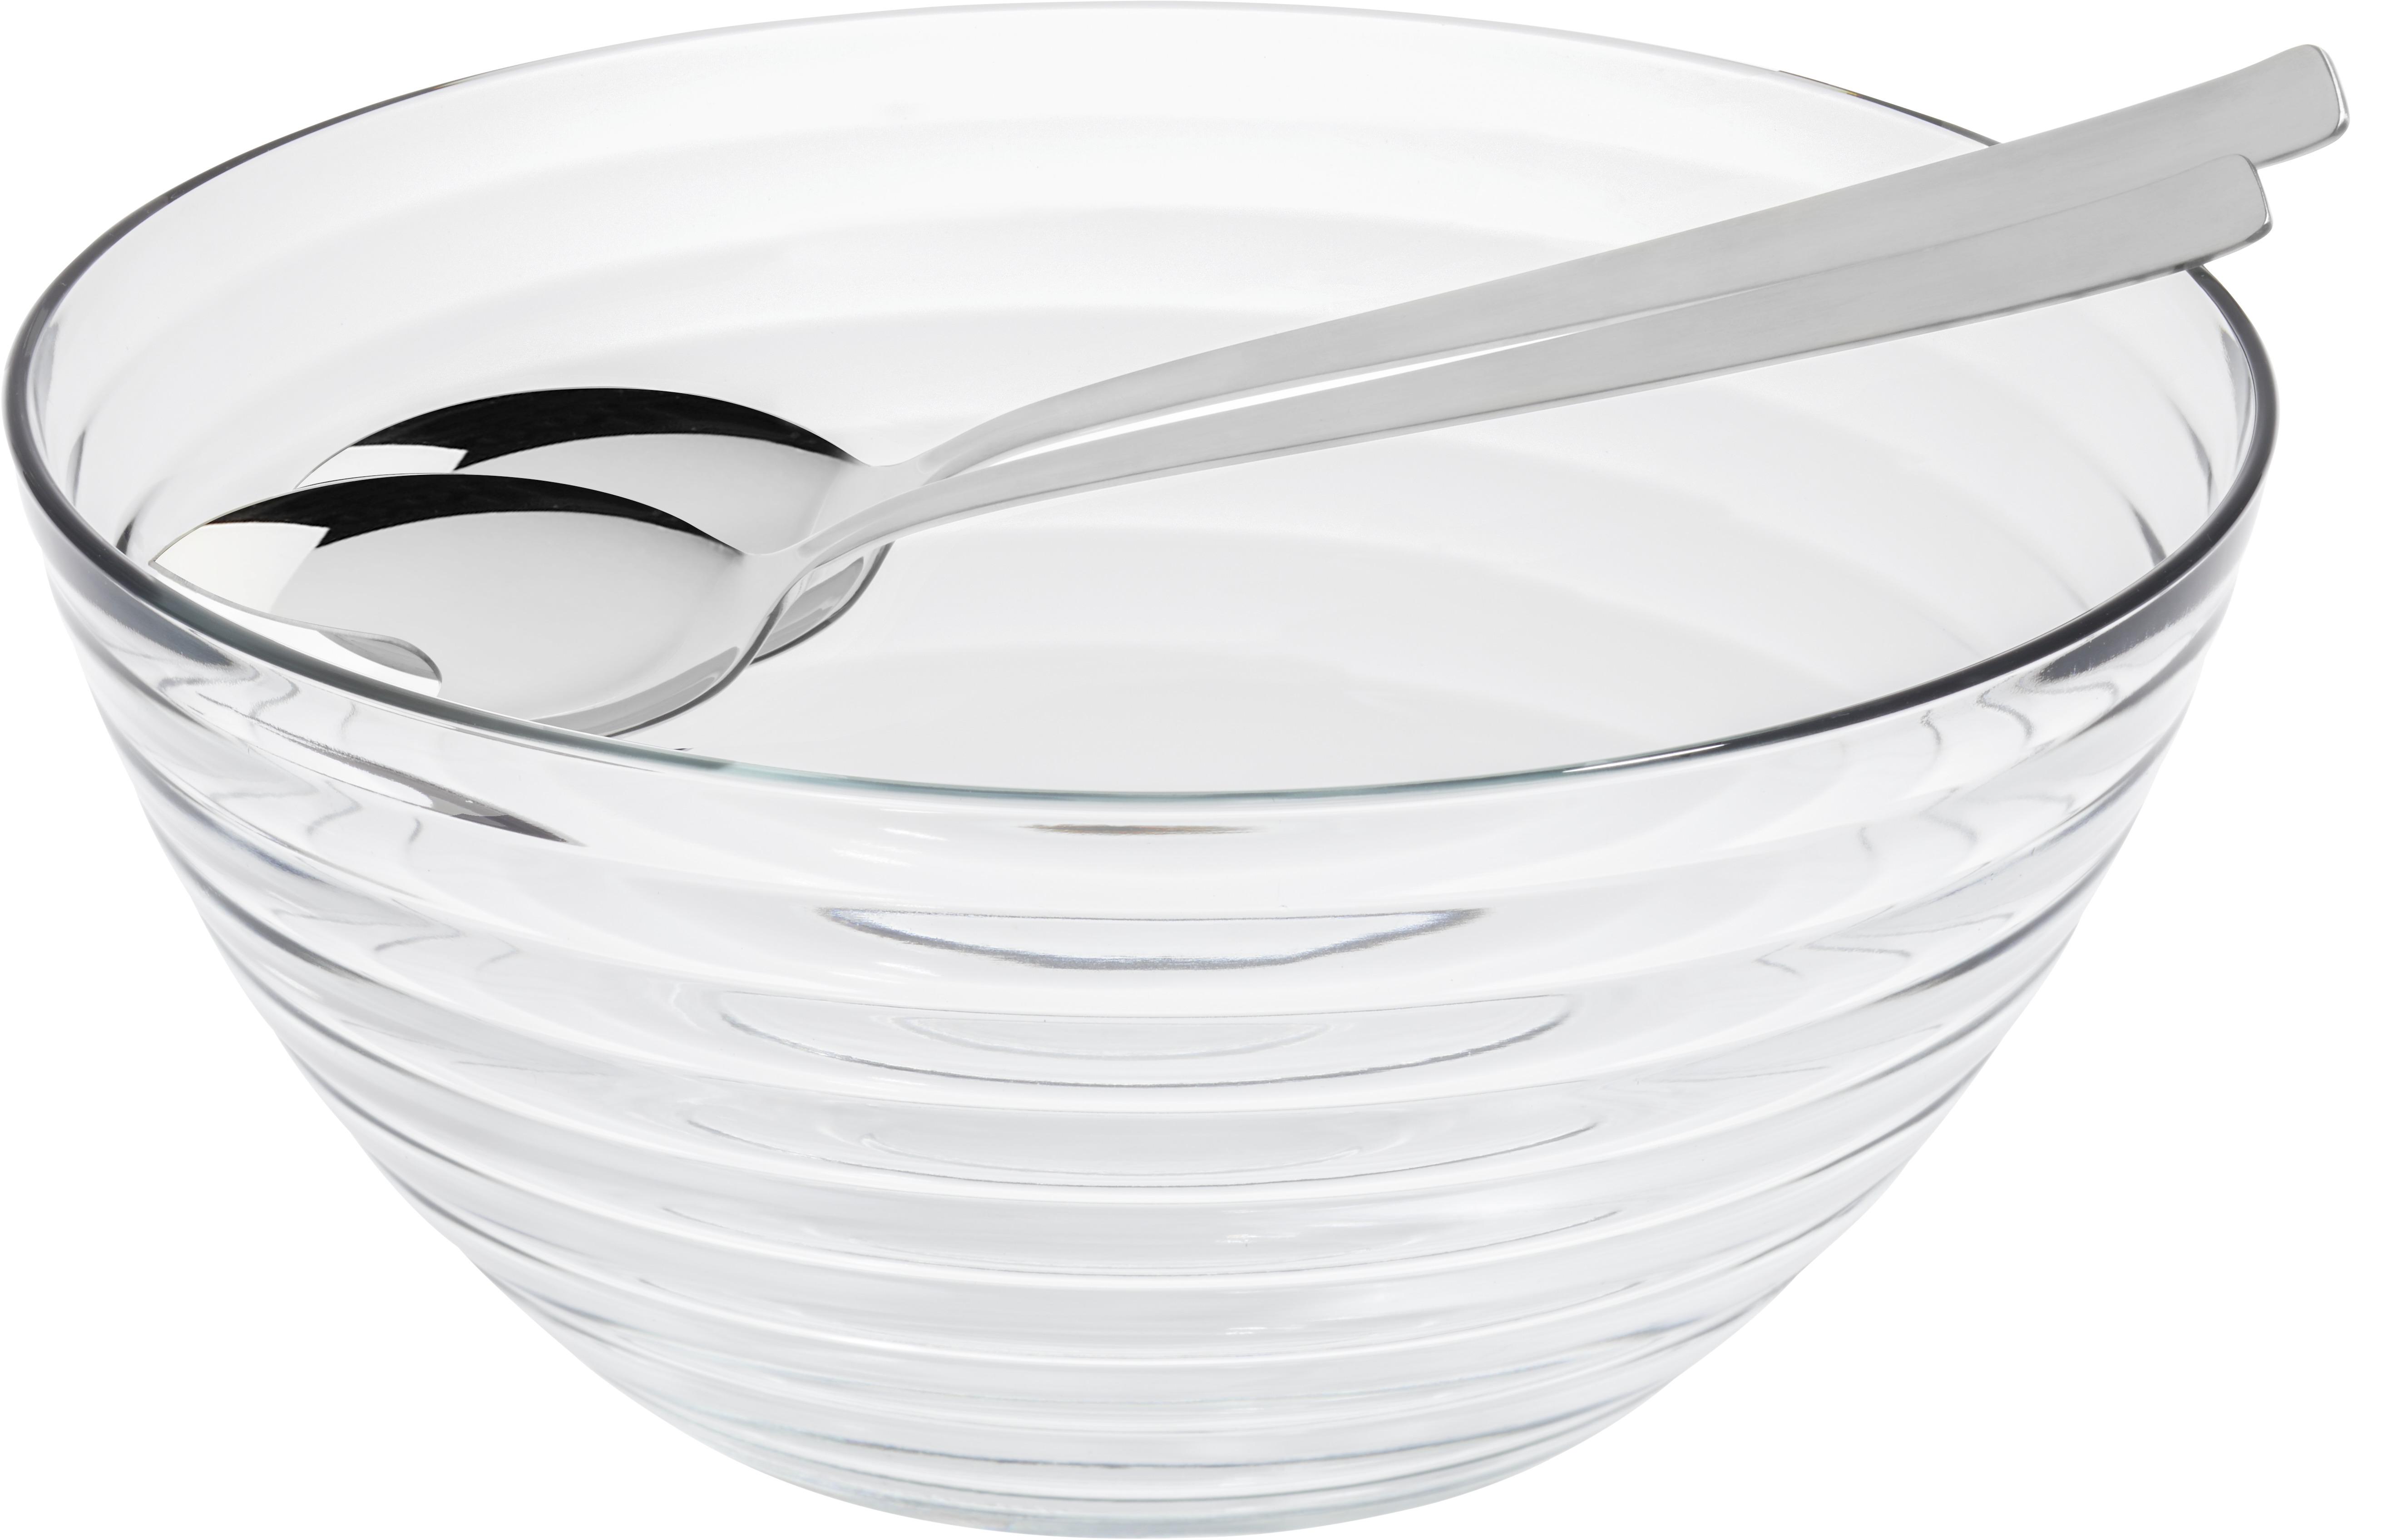 Salatschüsselset aus Glas mit Besteck, 3-teilig - Klar, KONVENTIONELL, Glas/Metall (29cm) - Rösle